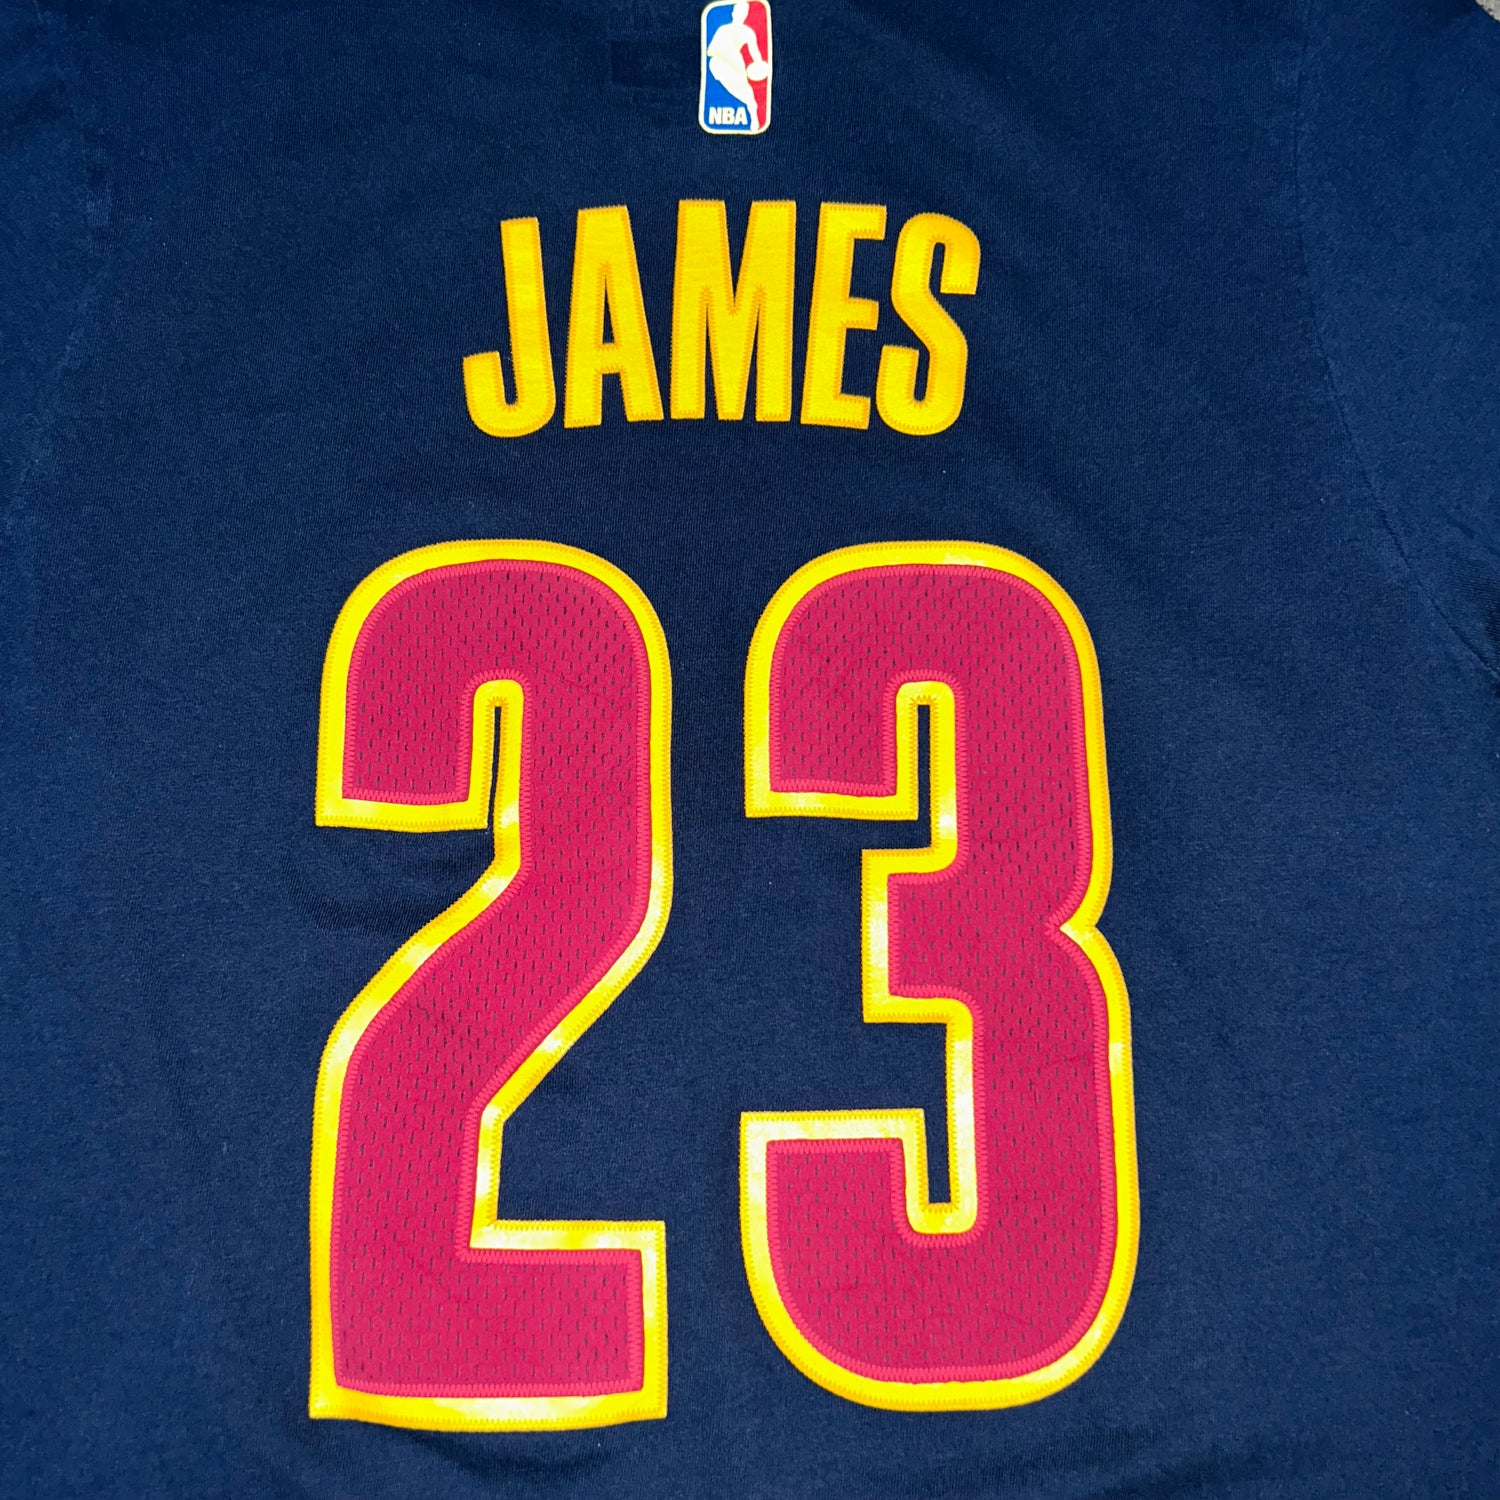 T-shirt Cleveland Cavaliers Lebron James 23  (S)